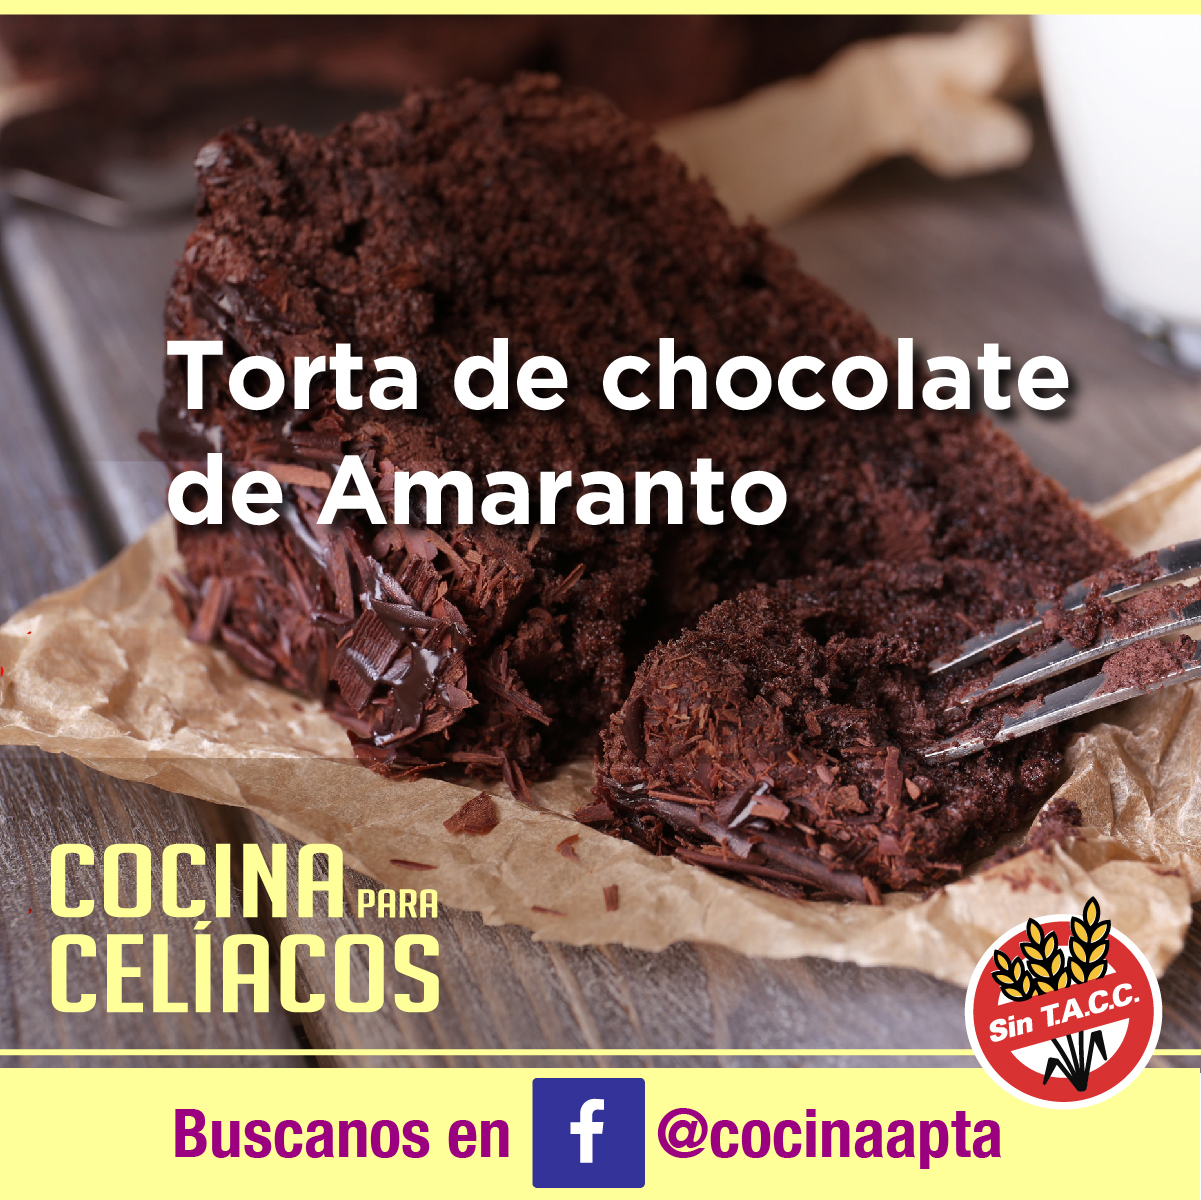 Torta de Chocolate de Amaranto - Cocina Para Celiacos -Celi&Co